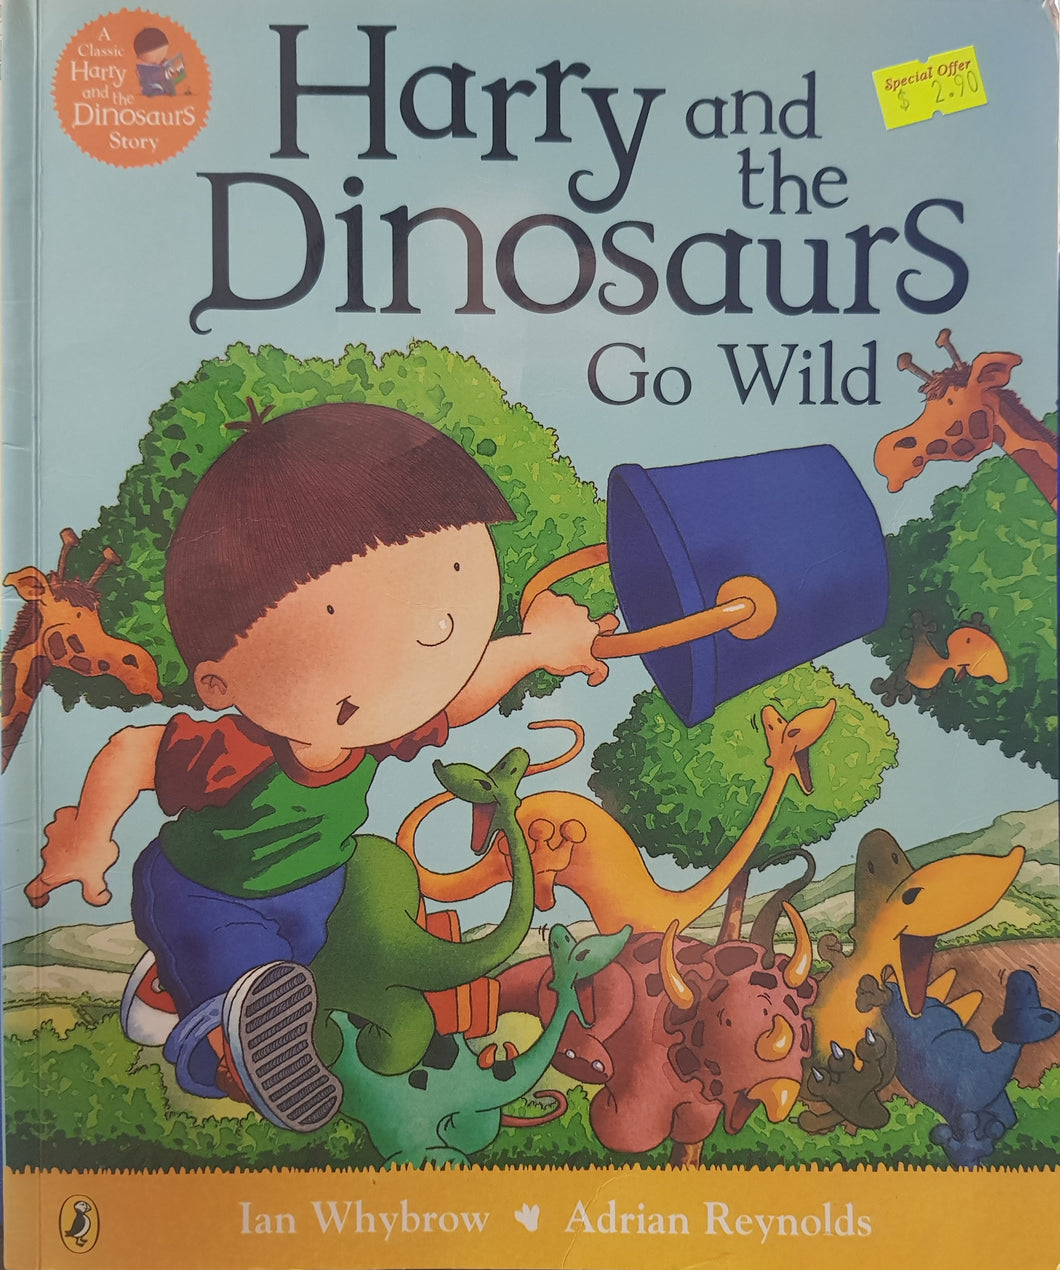 Harry and the Dinosaurs Go Wild - Ian Whybrow & Adrian Reynolds